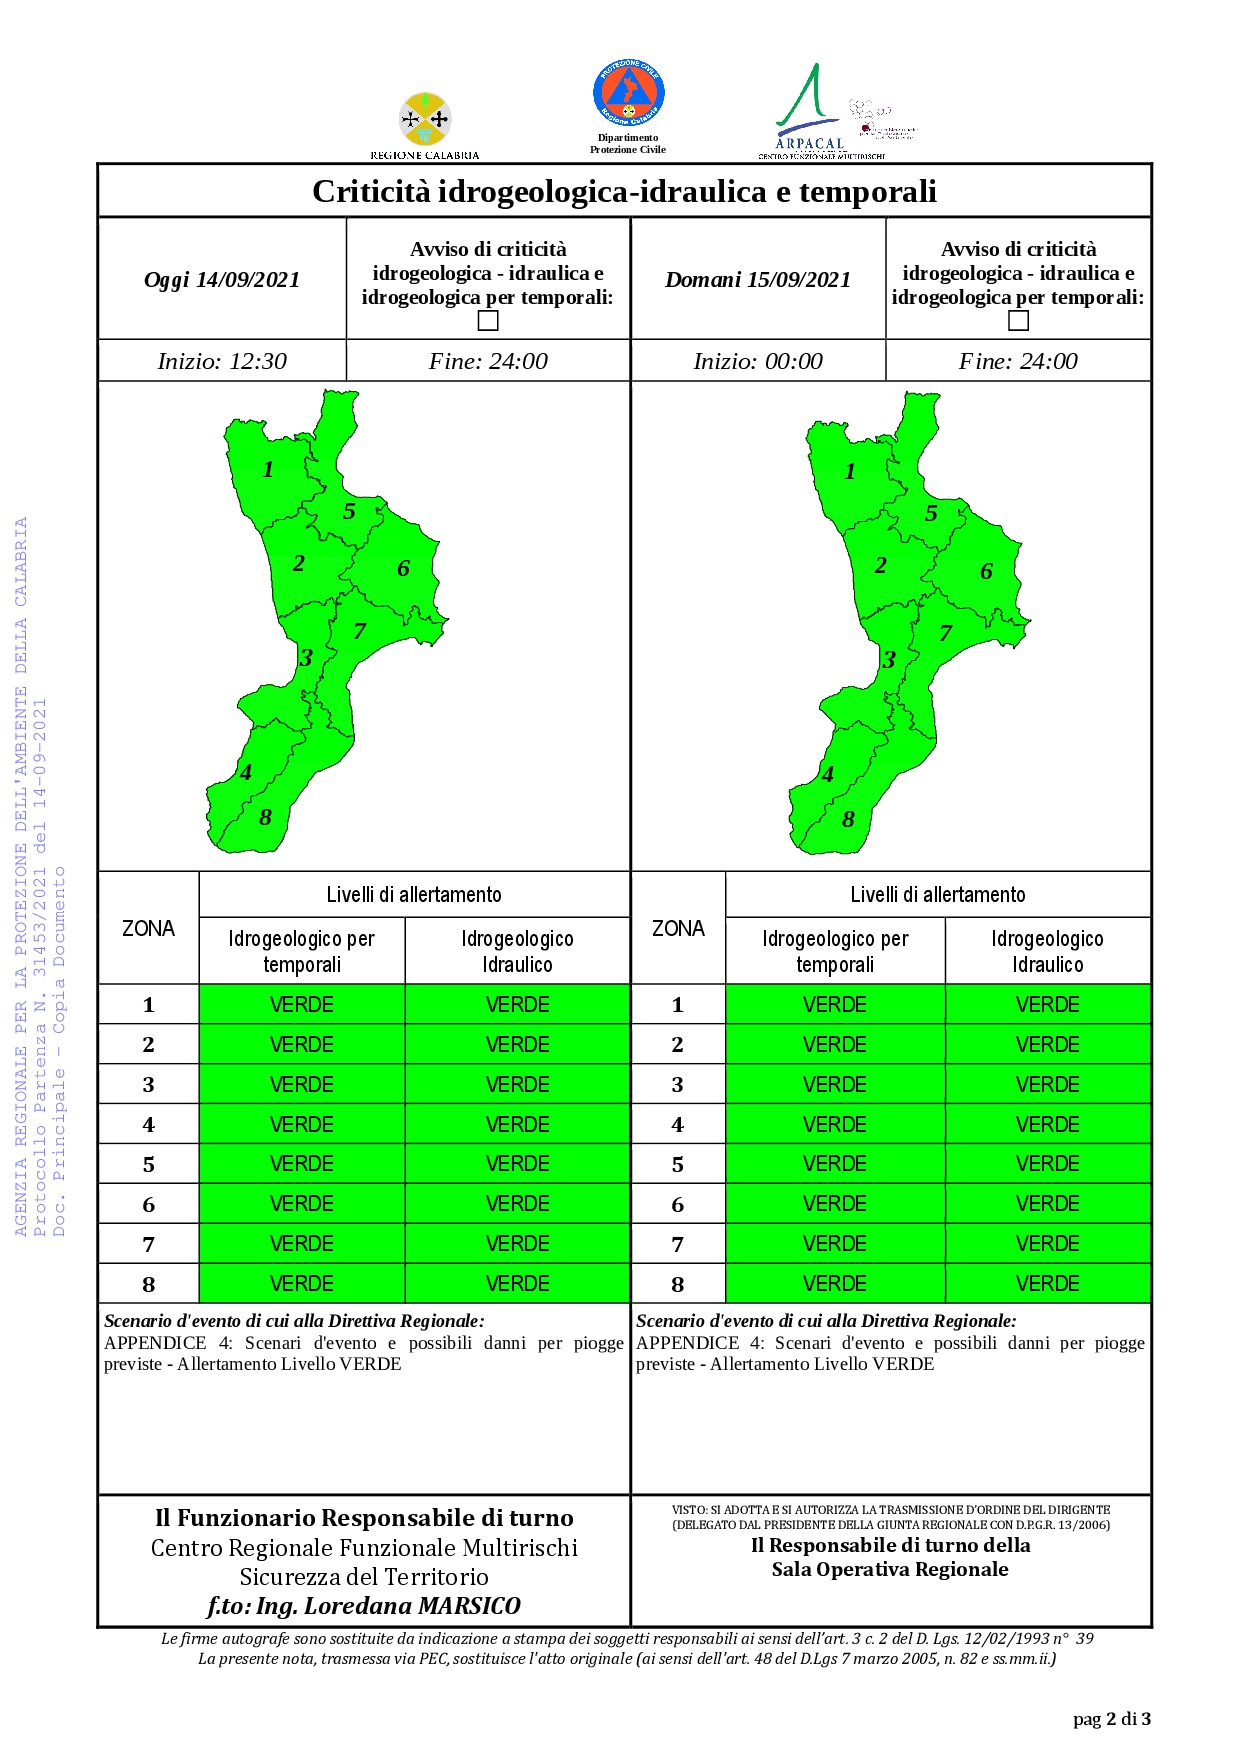 Criticità idrogeologica-idraulica e temporali in Calabria 14-09-2021